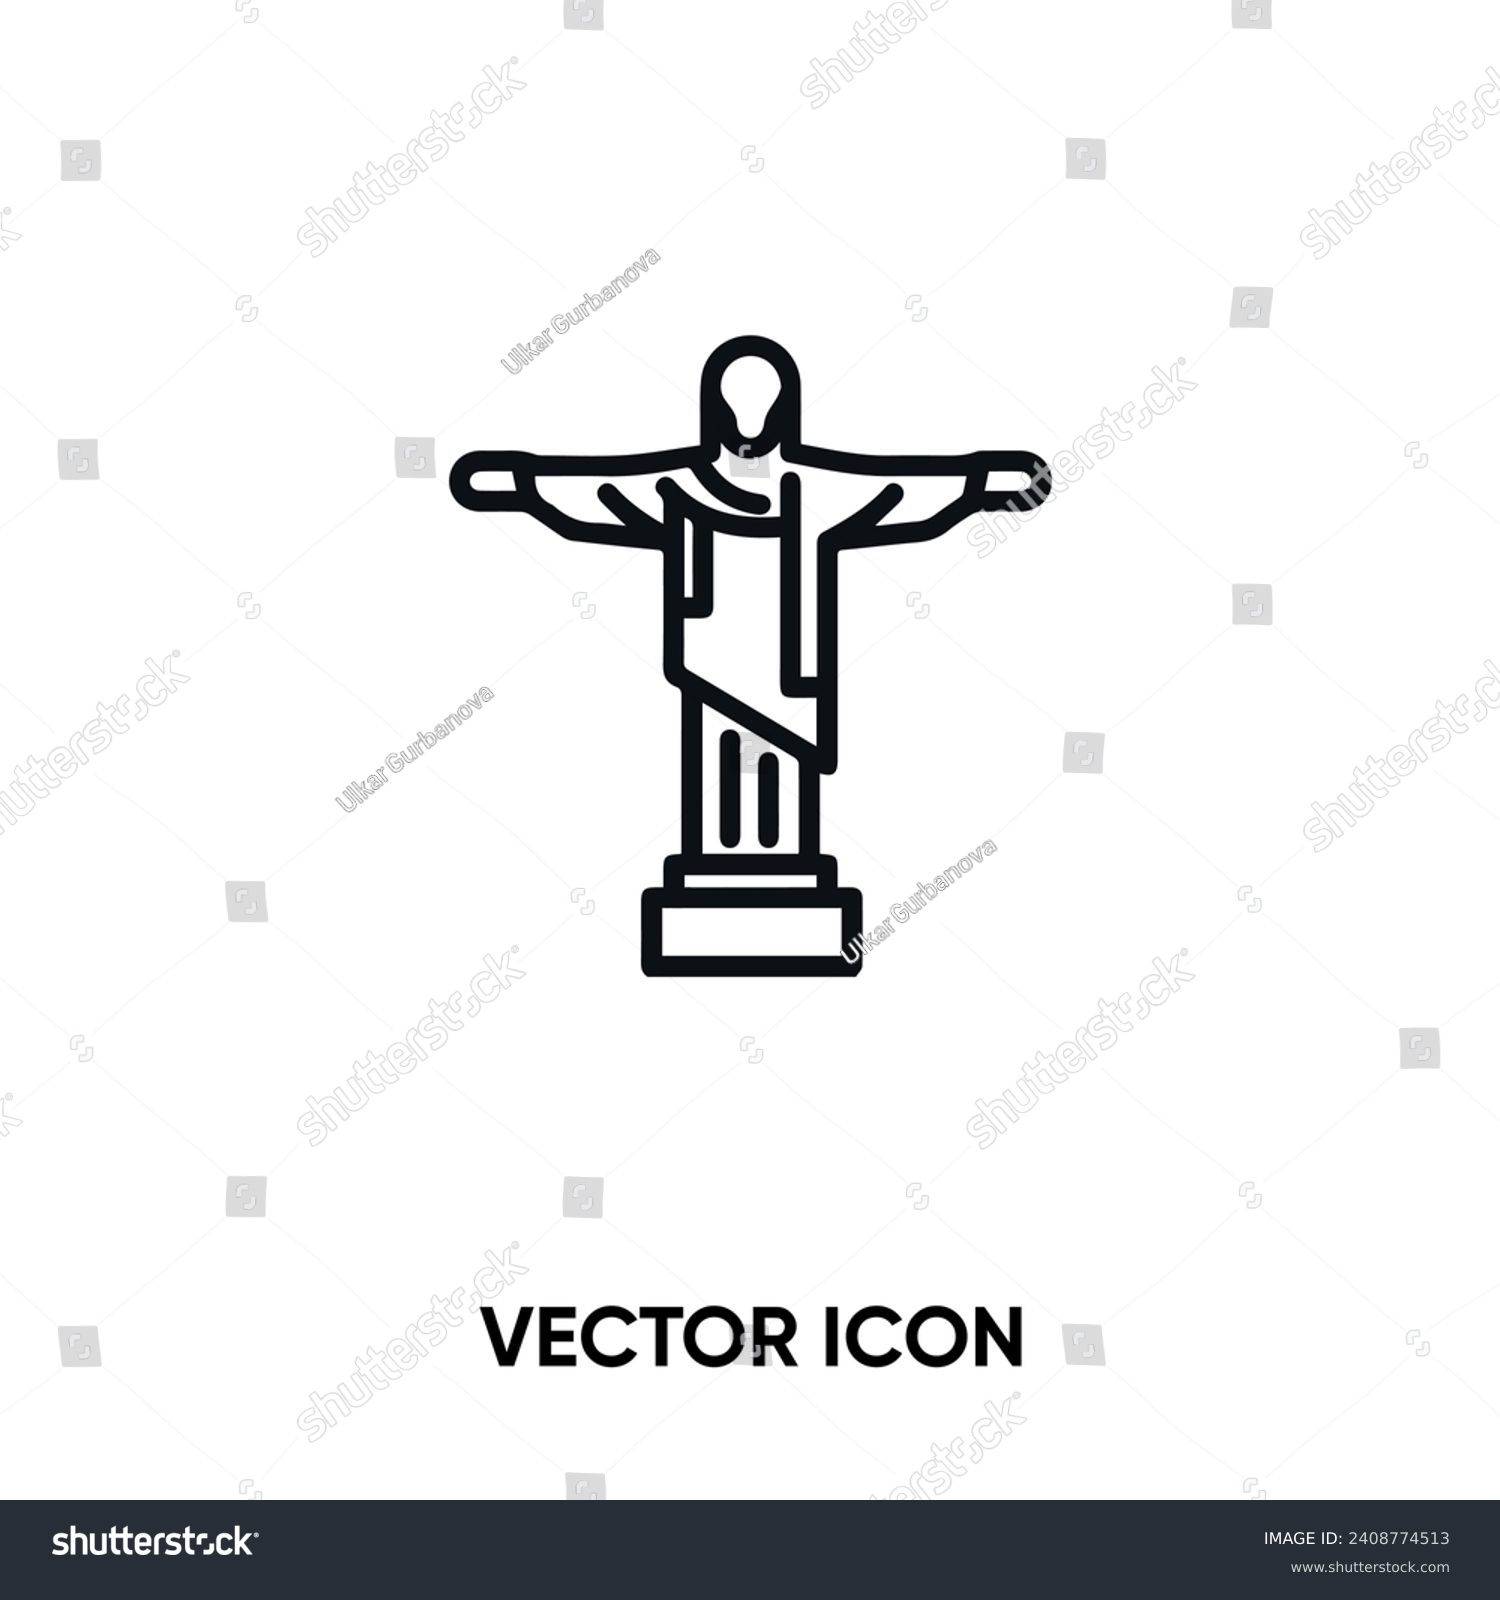 SVG of Christ the redeemer vector icon . Modern, simple flat vector illustration for website or mobile app. Brasil symbol, logo illustration. Pixel perfect vector graphics svg